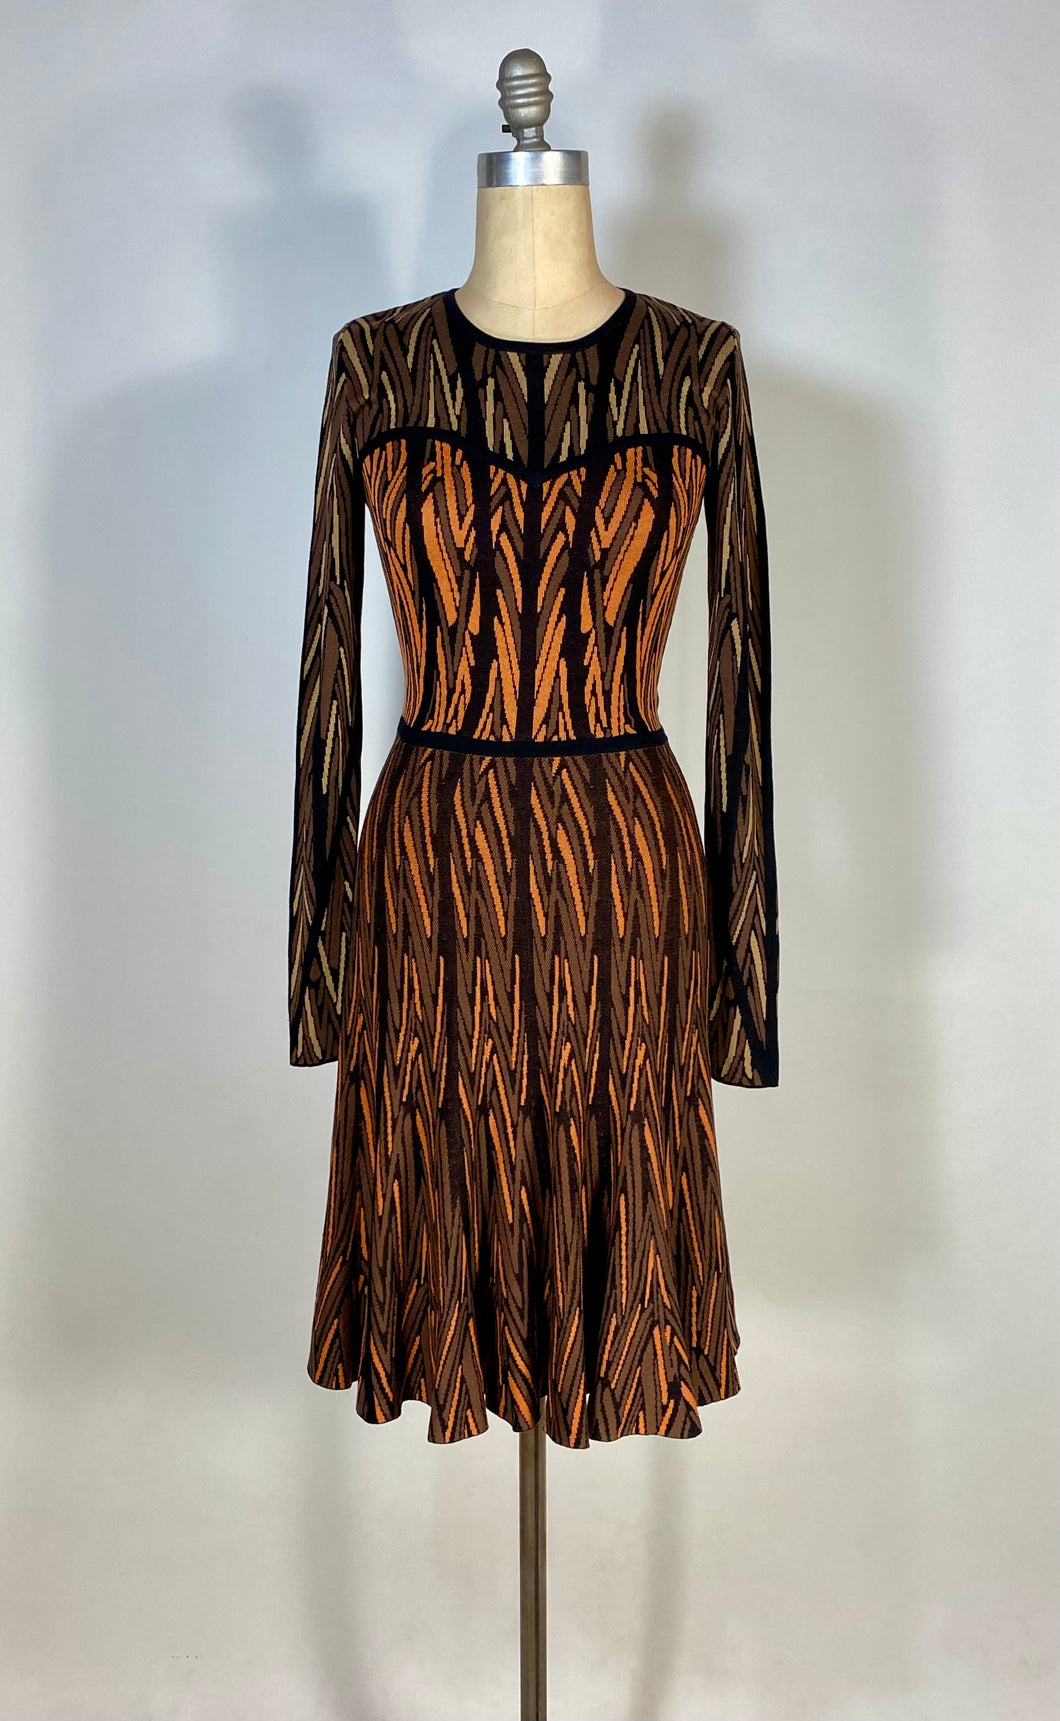 2000's BCBG MAX AZRIA pieced knit KAYLA autumnal tone dress w/fluted skirt size Small